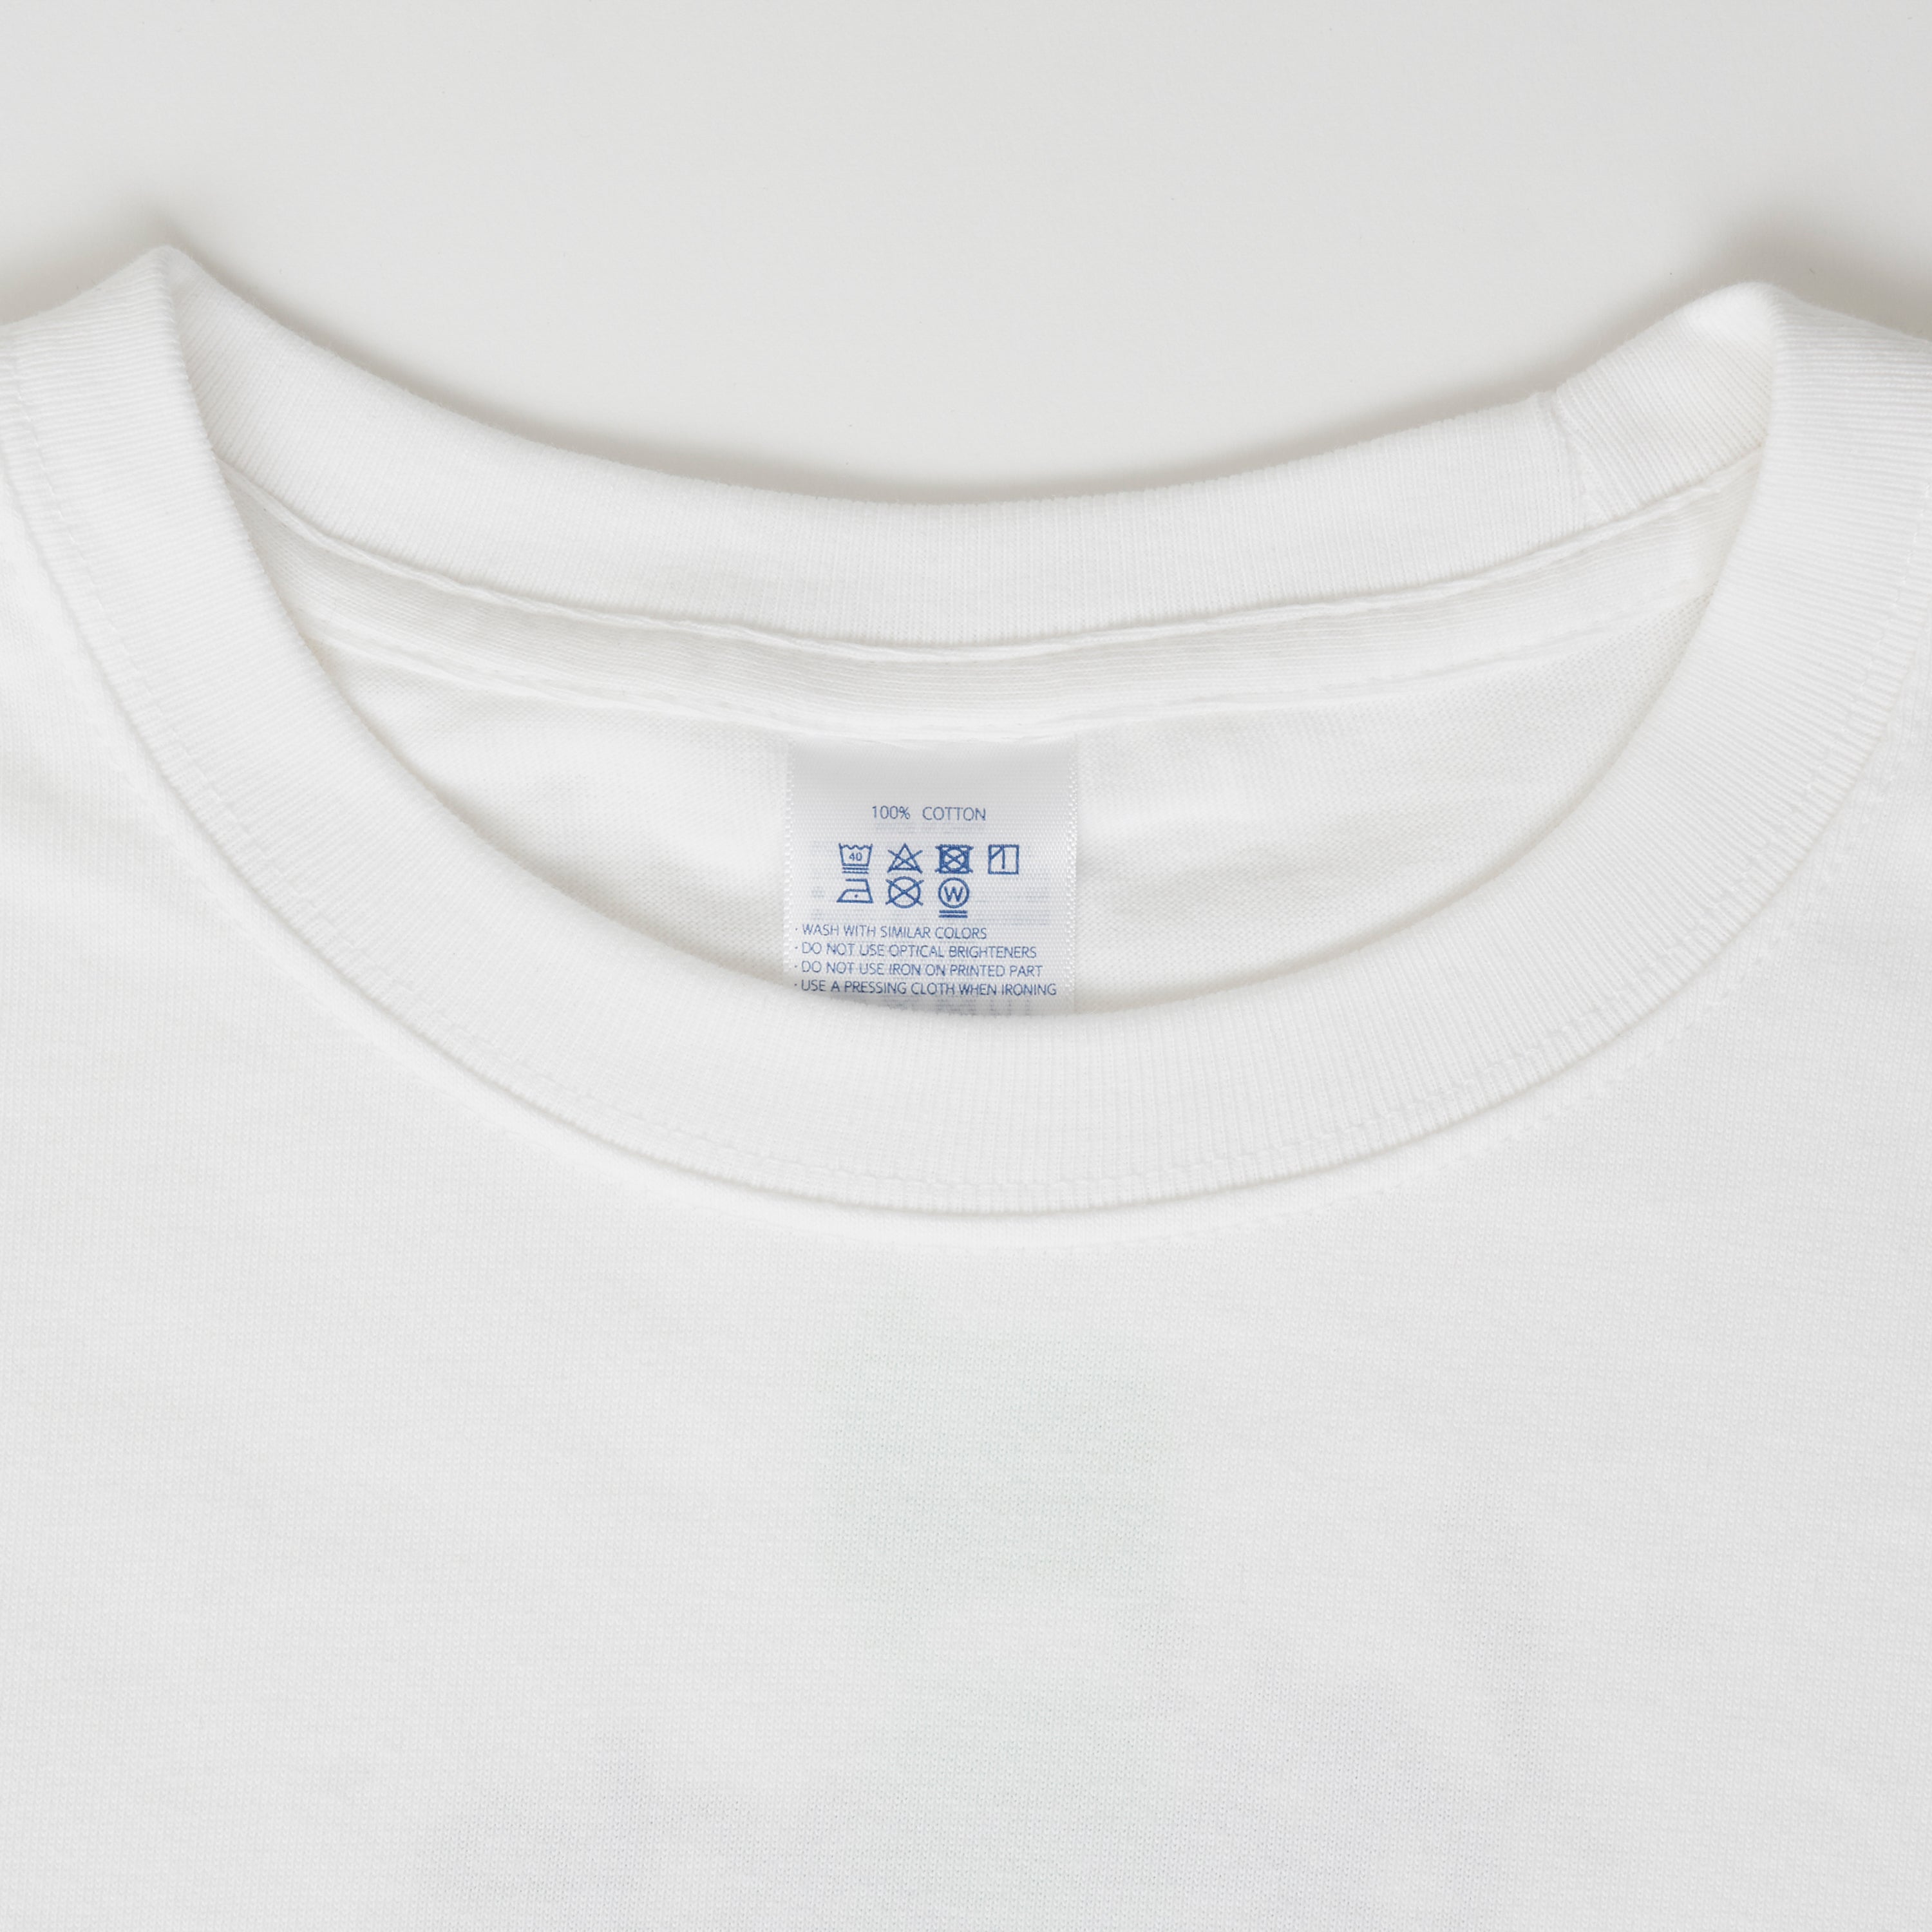 10th anniv. Discography T-Shirts WHITE